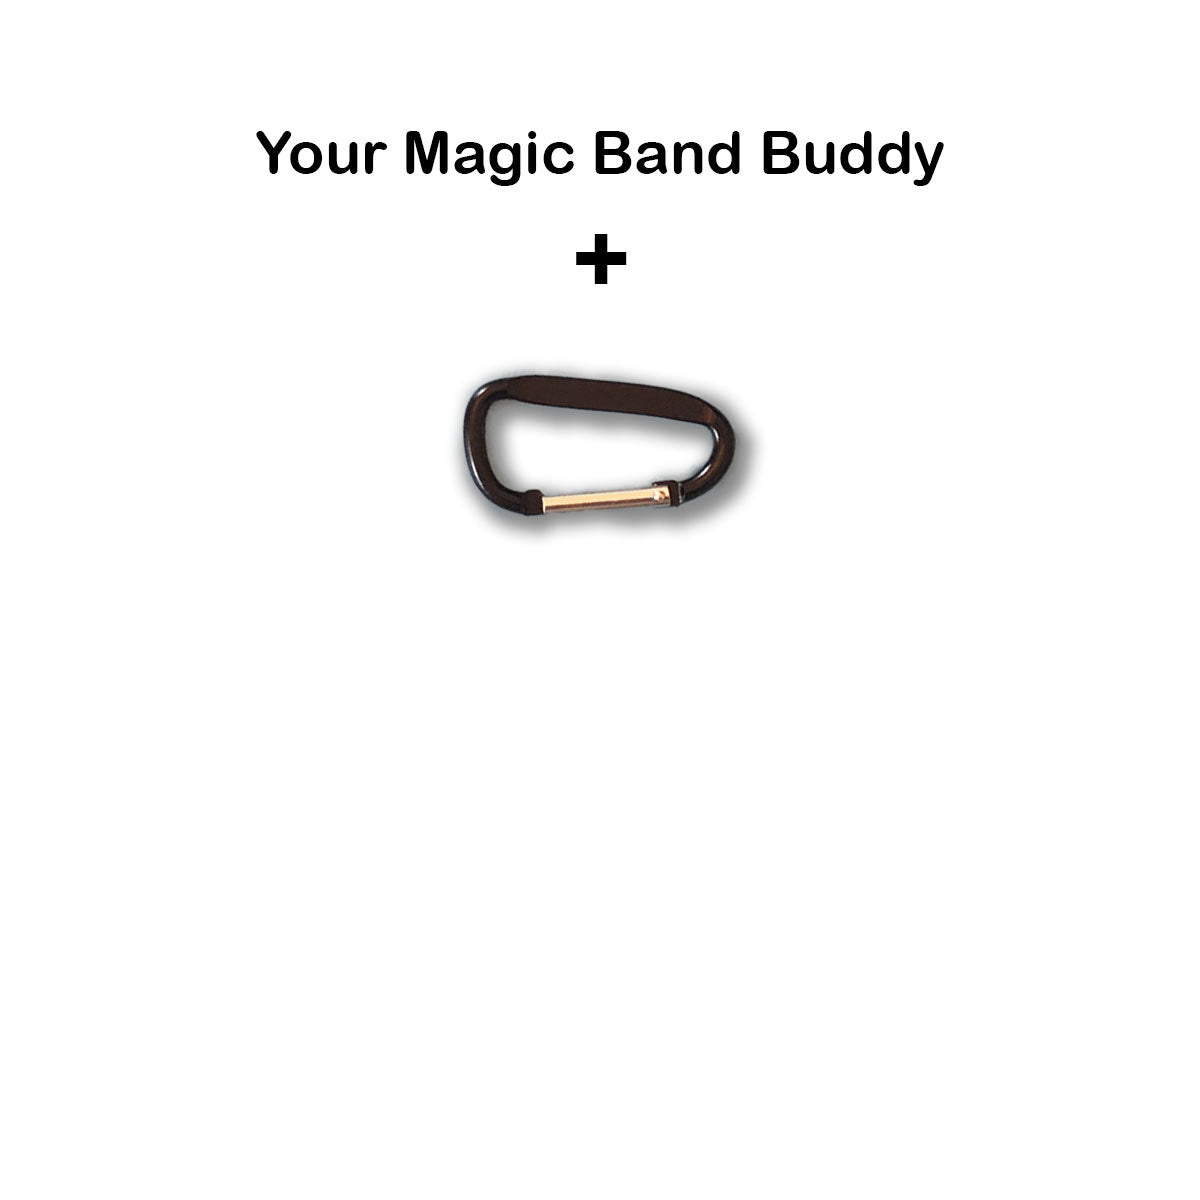 Castle Magic Band Buddy